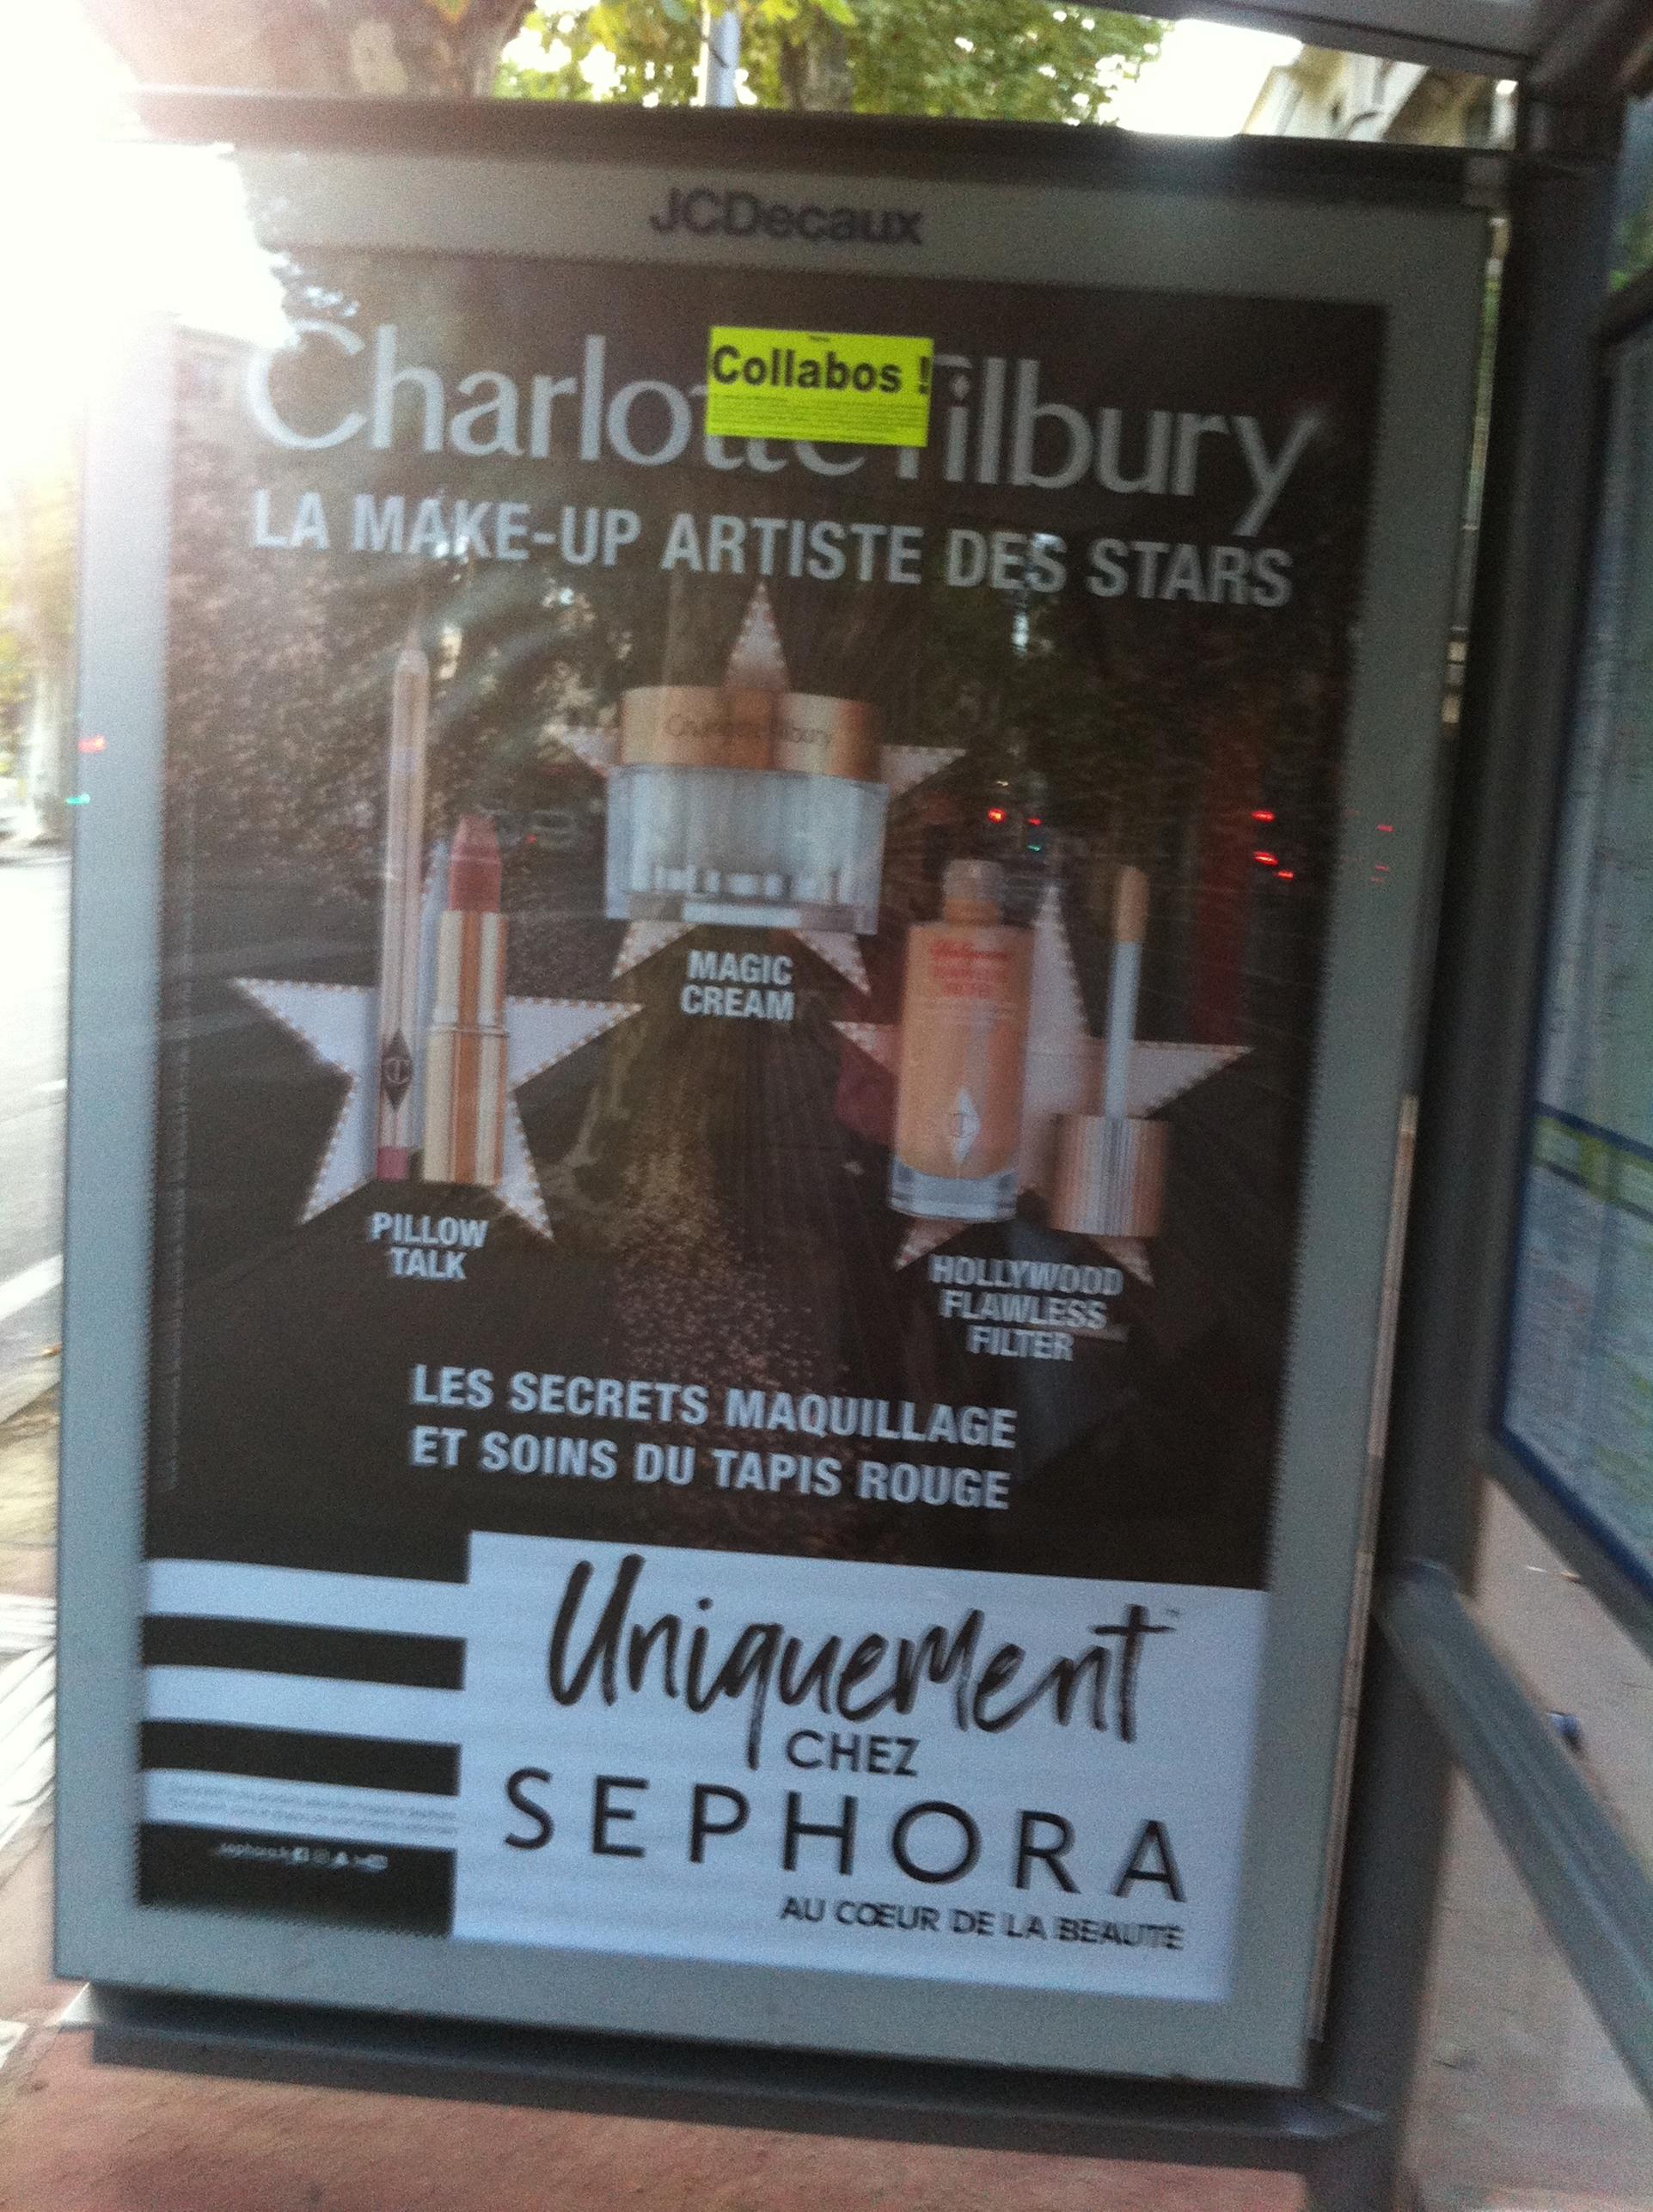 Sephora, Charlotte Tilbury, la make-up artiste des stars